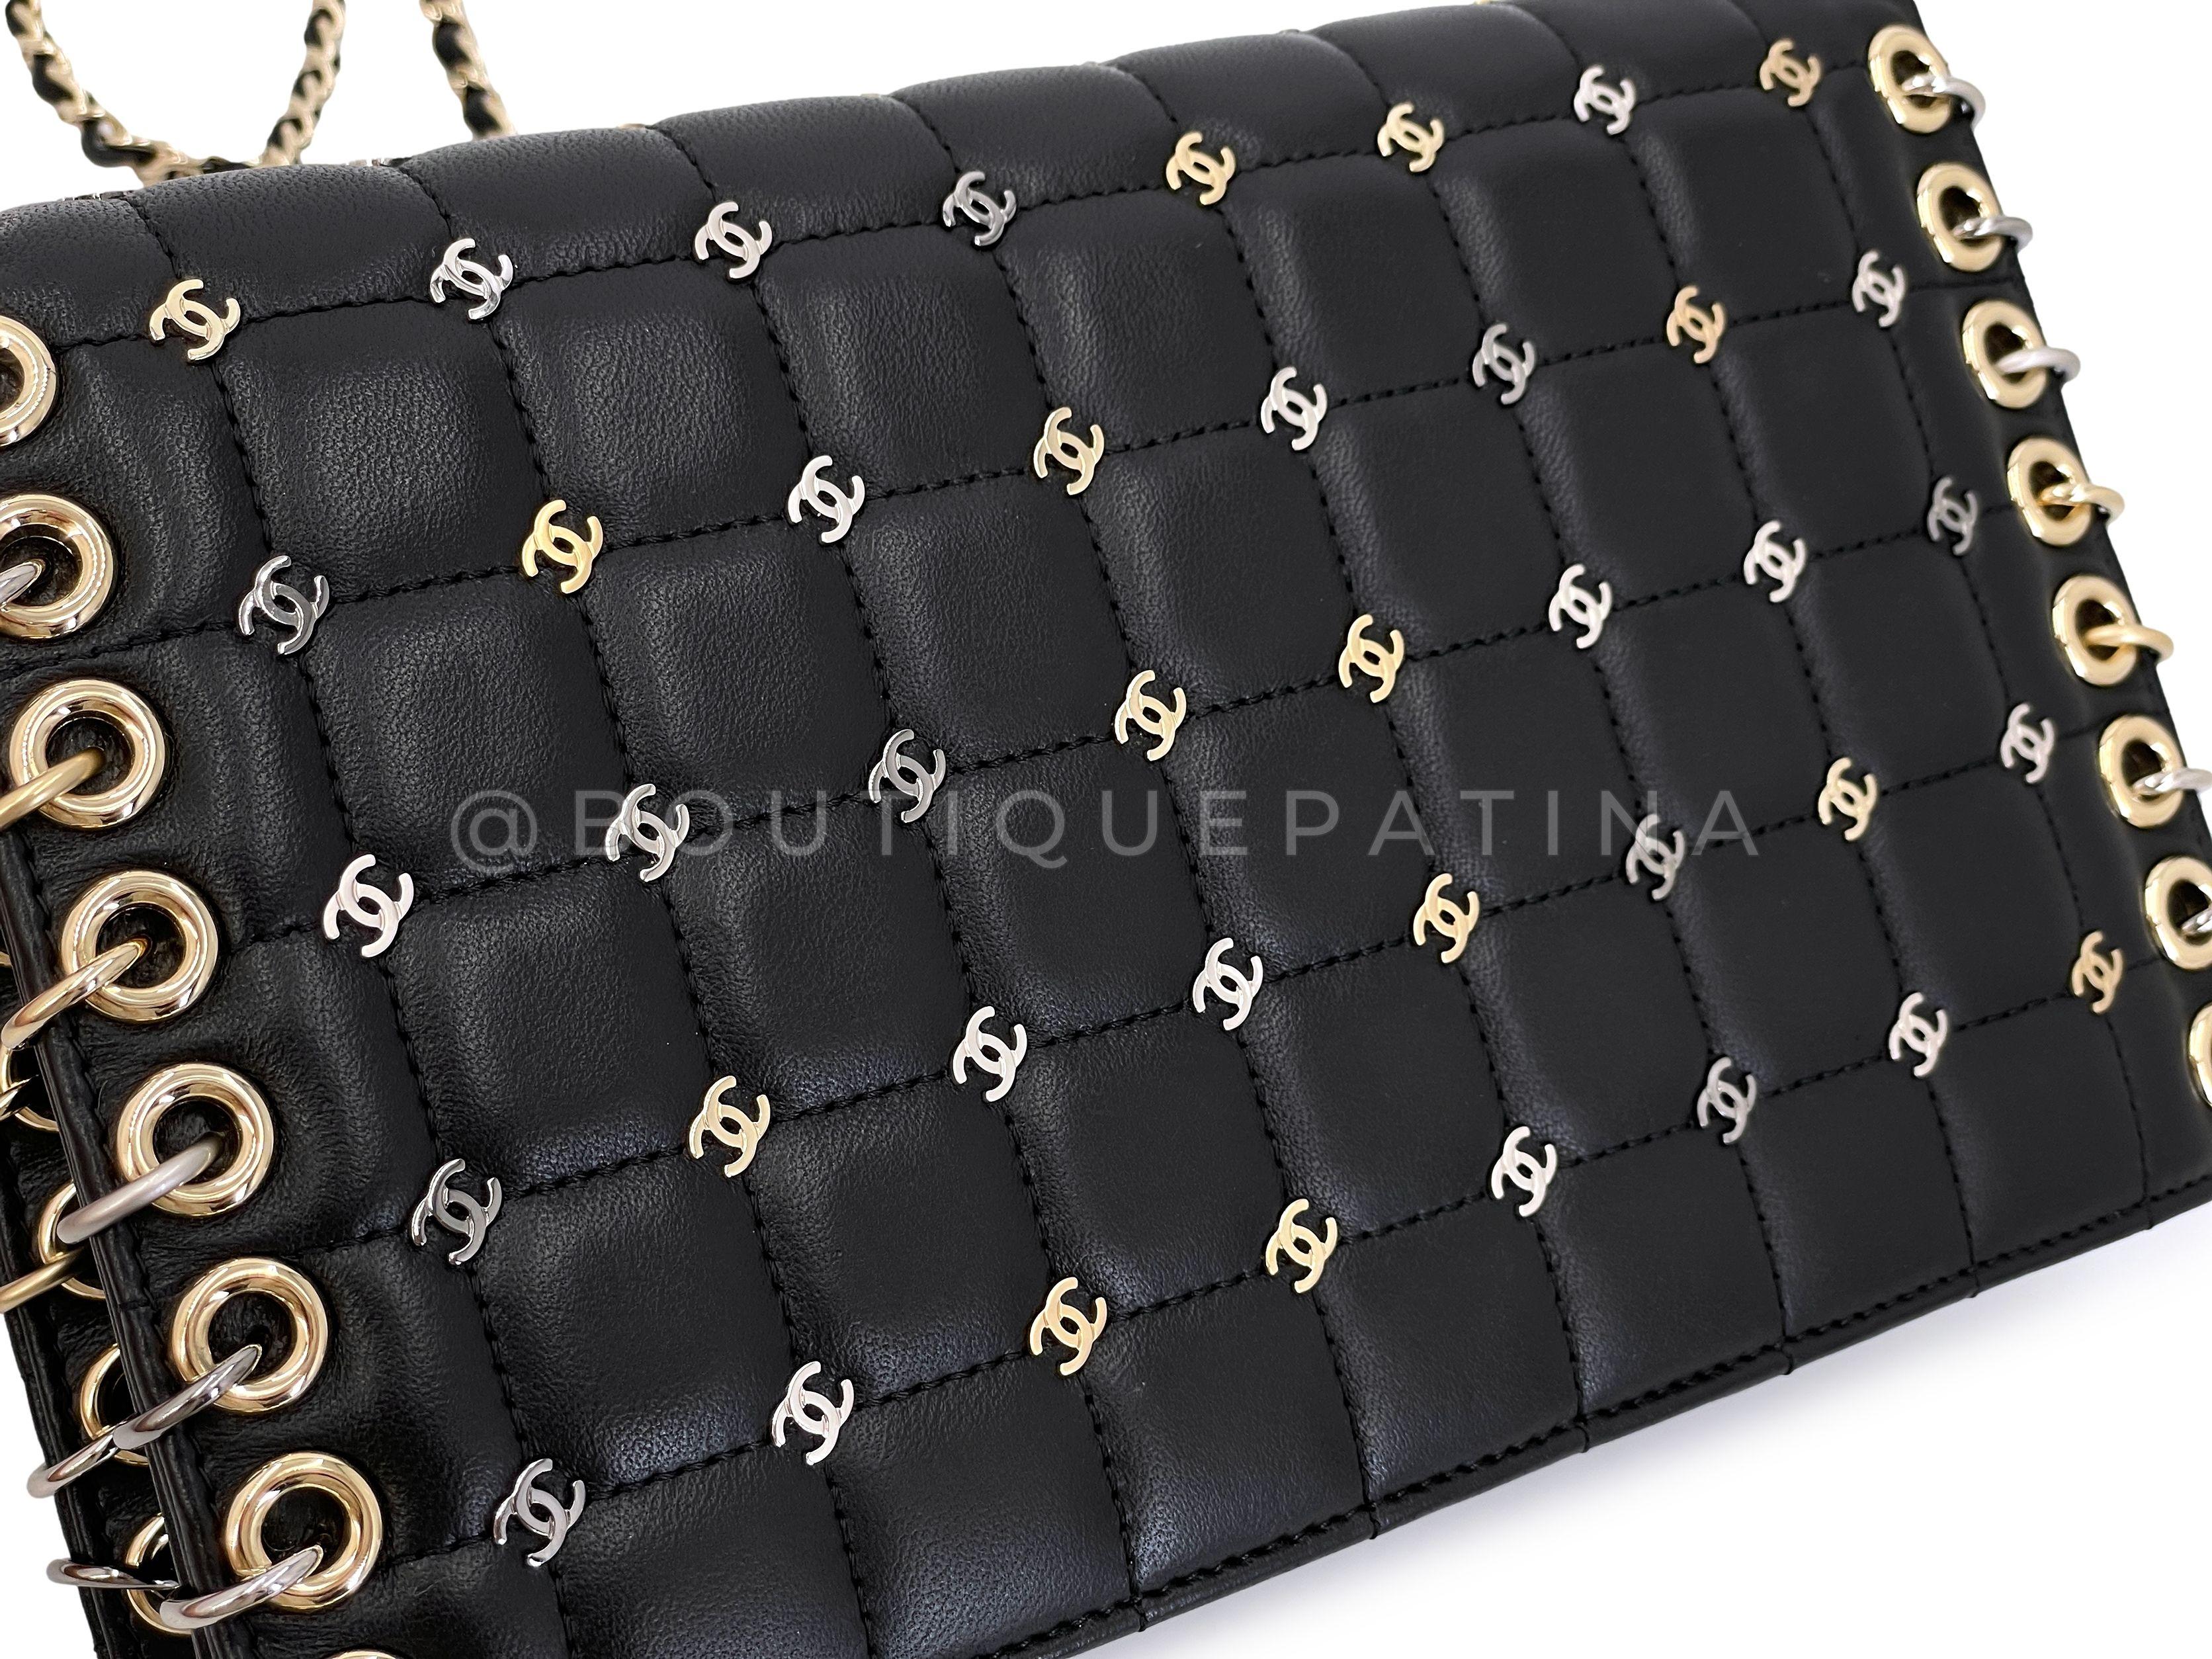 Pristine Chanel 16B Punk CC-Studded Piercing Clutch on Chain Bag Black 67544 For Sale 4